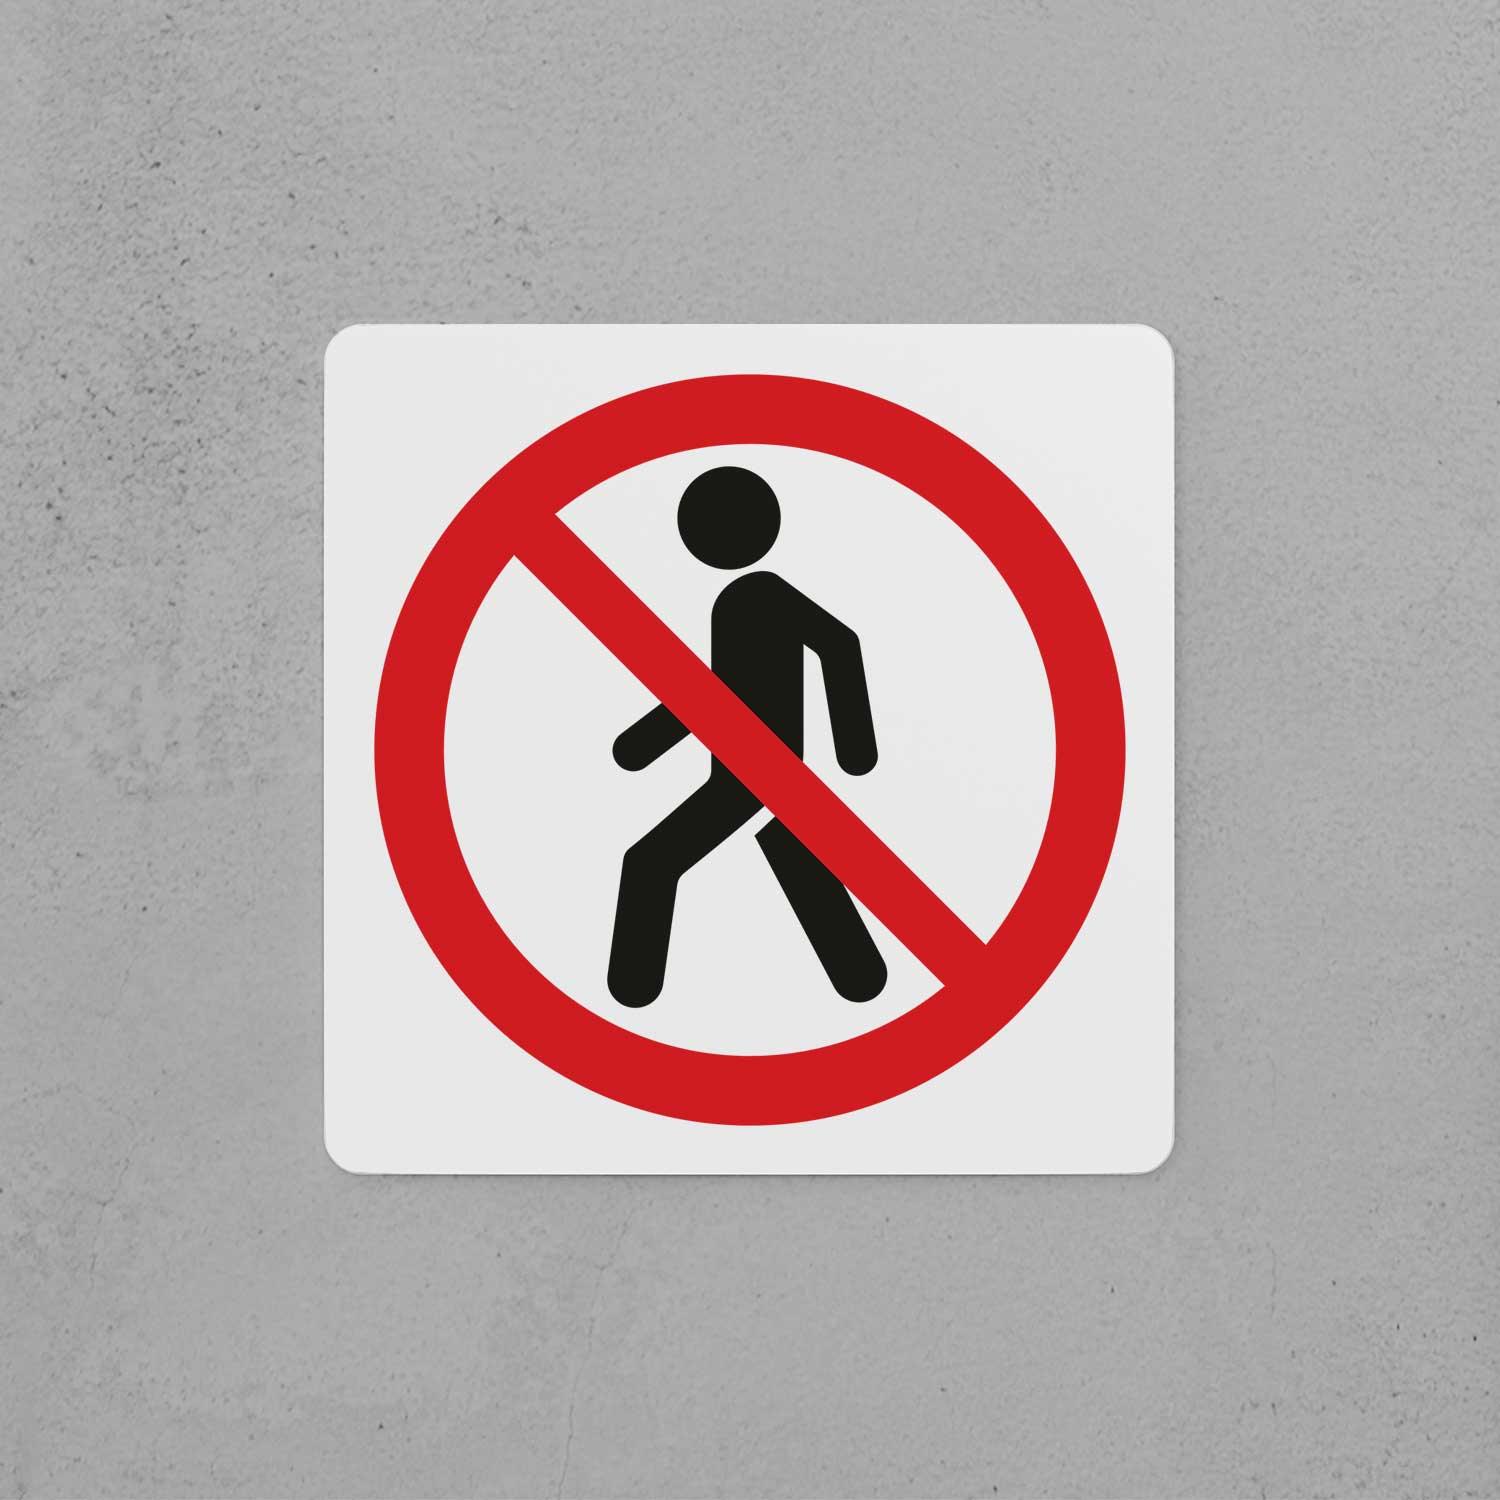 No Trespassing Sign - Housenama